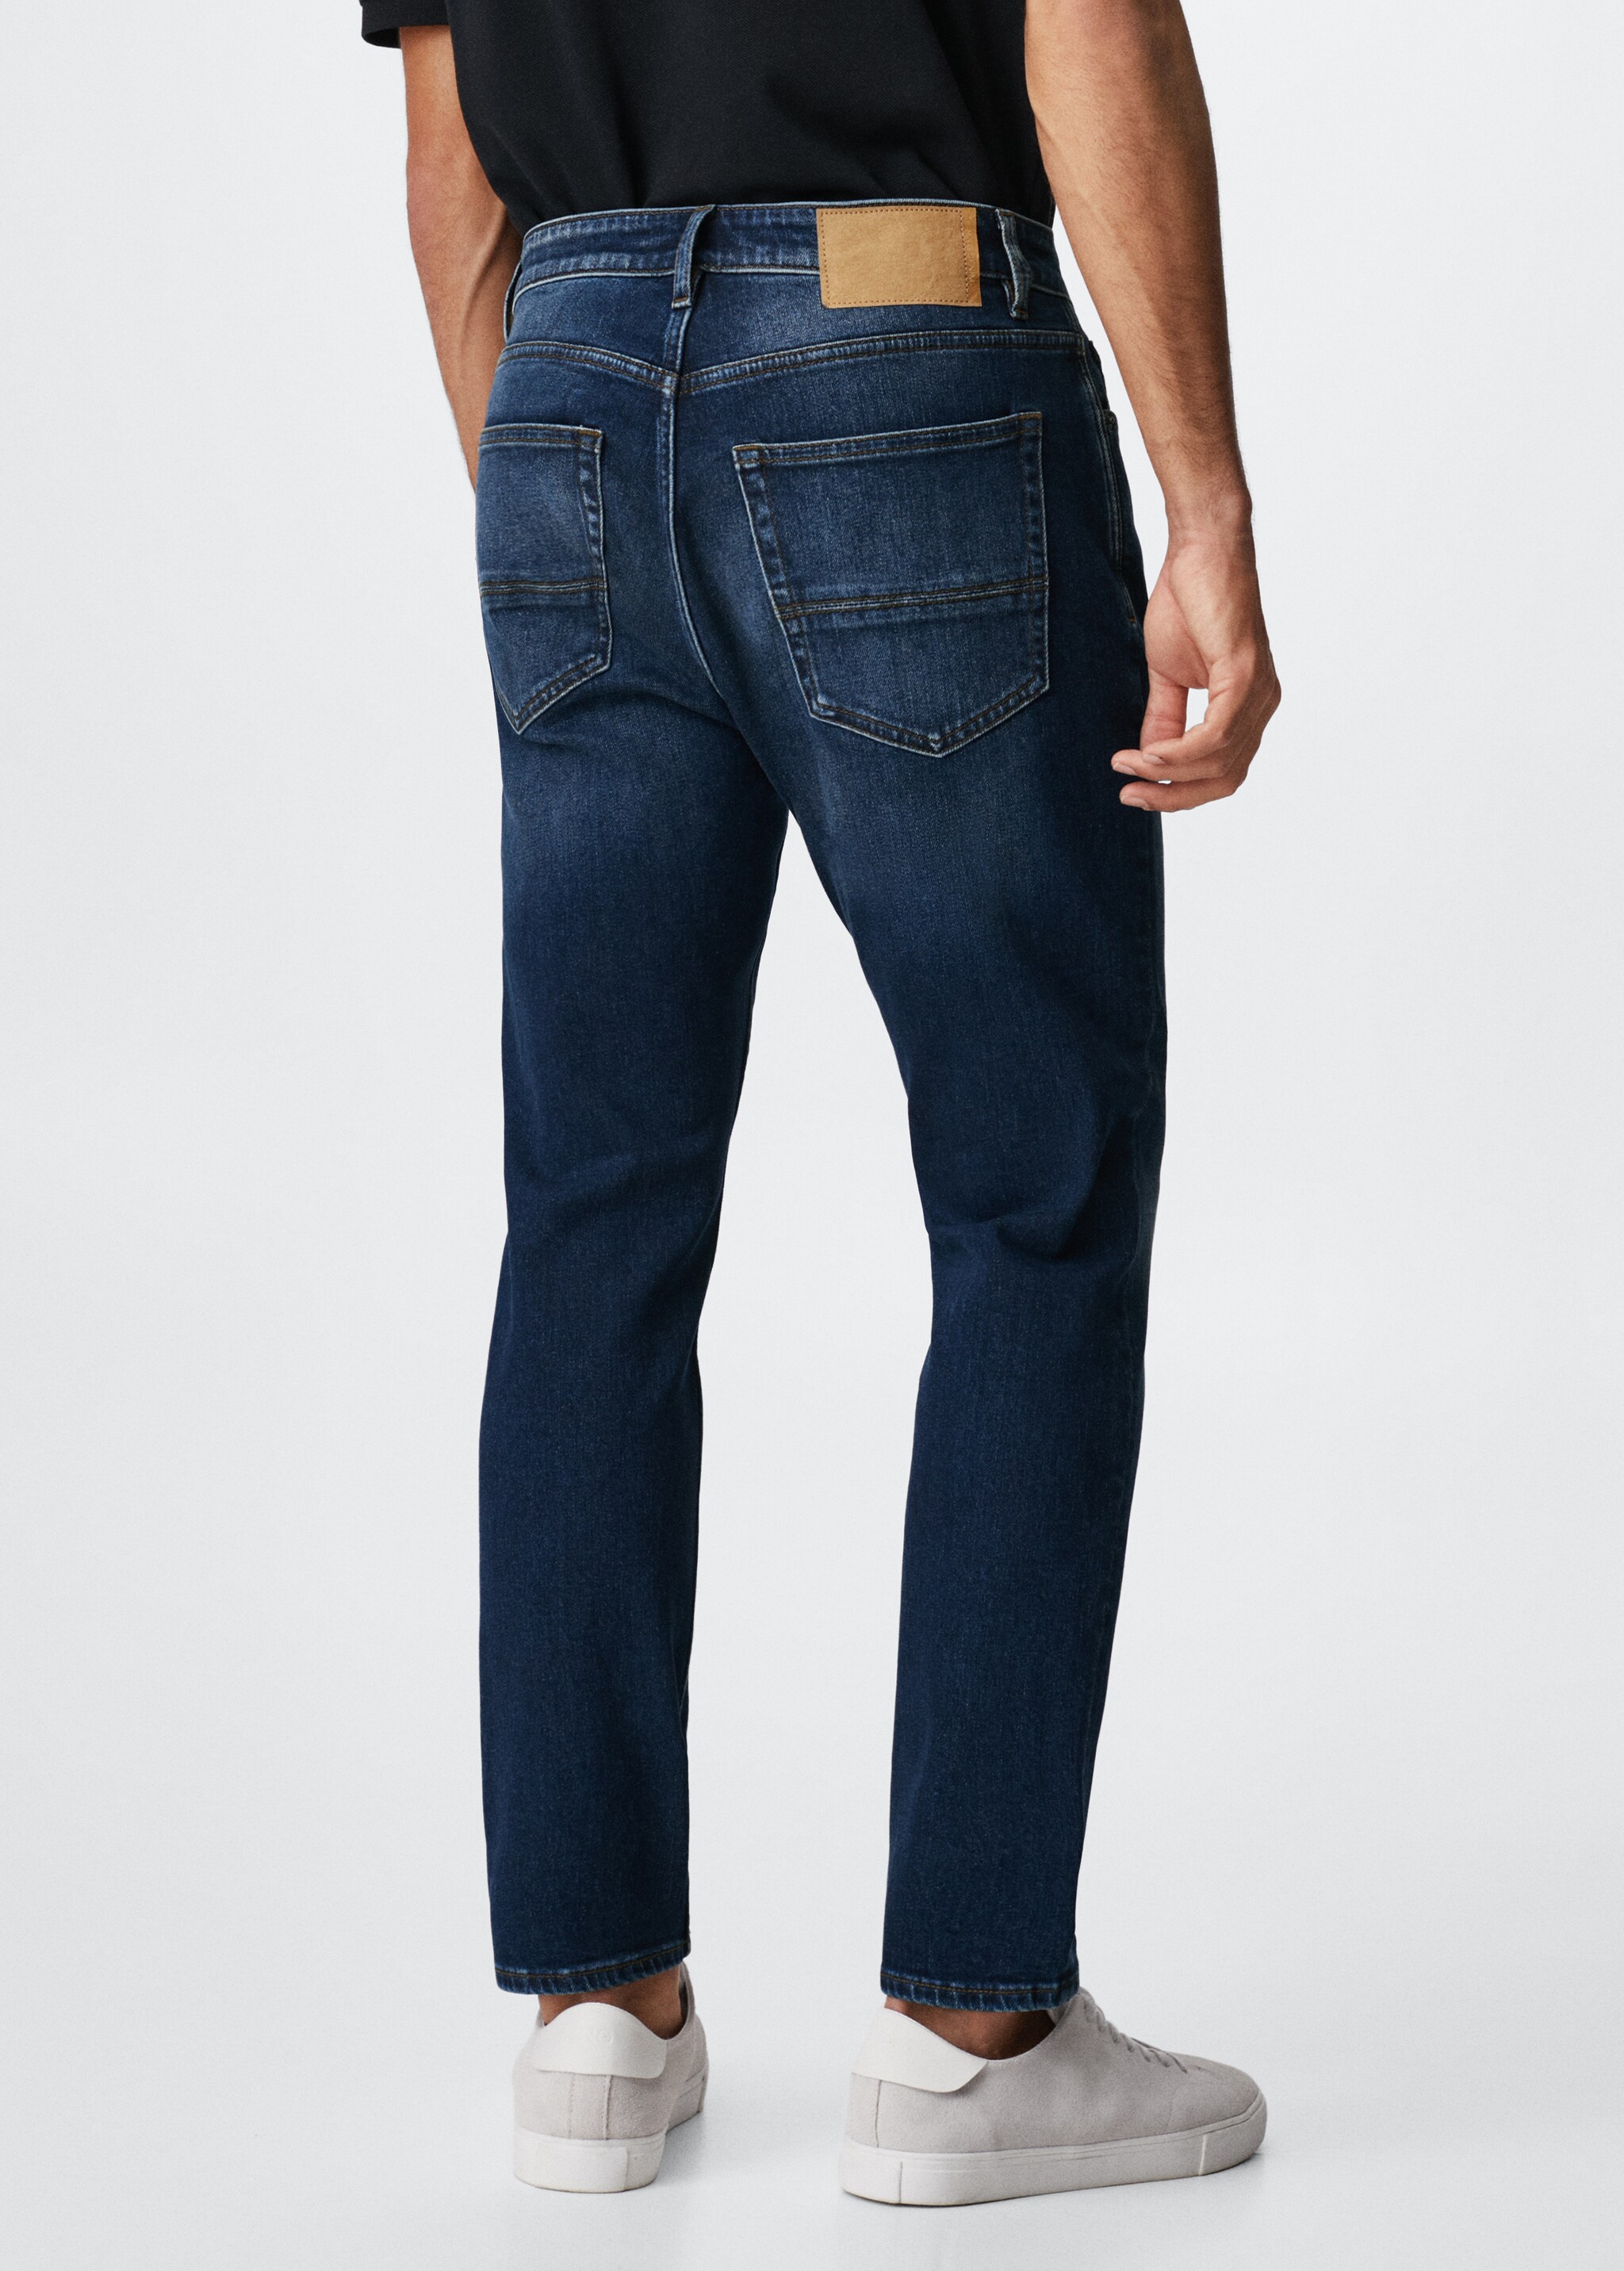 Jeans Tom tapered fit - Reverso del artículo